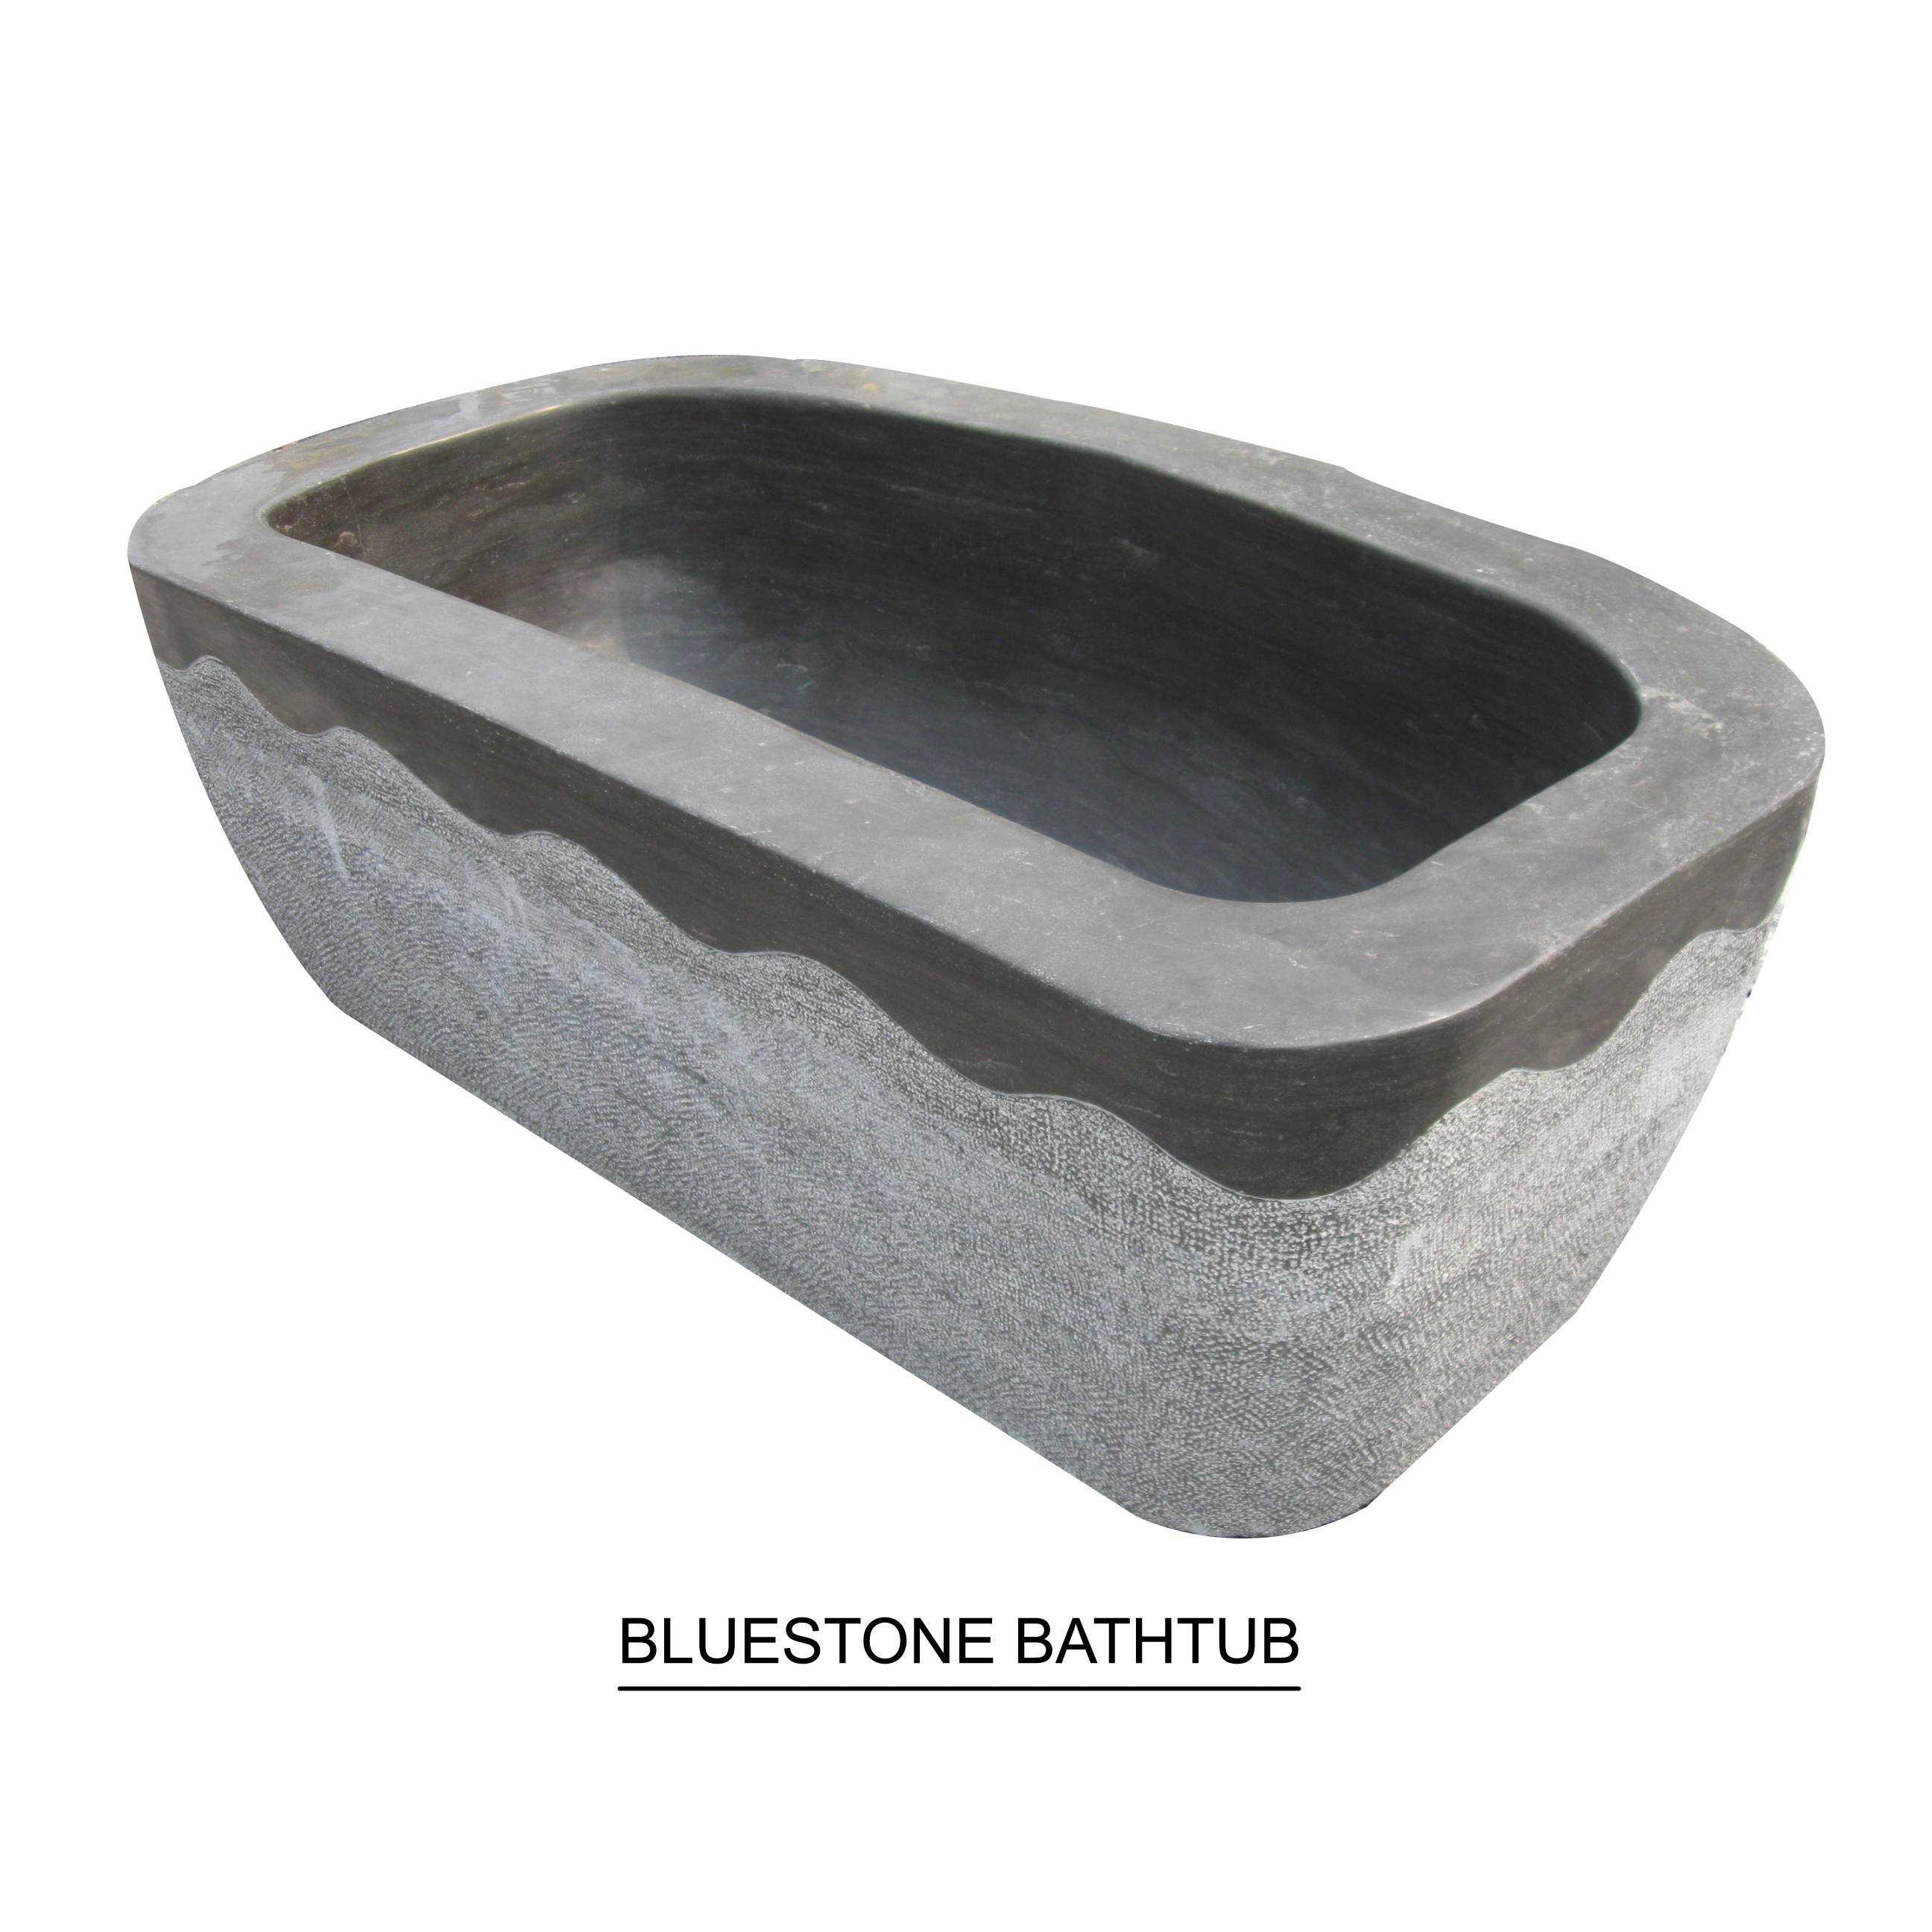 {dede:type typeid='4'}https://www.marblebathtub.com/bathtup/black-marble-bathtub.html{/dede:type}